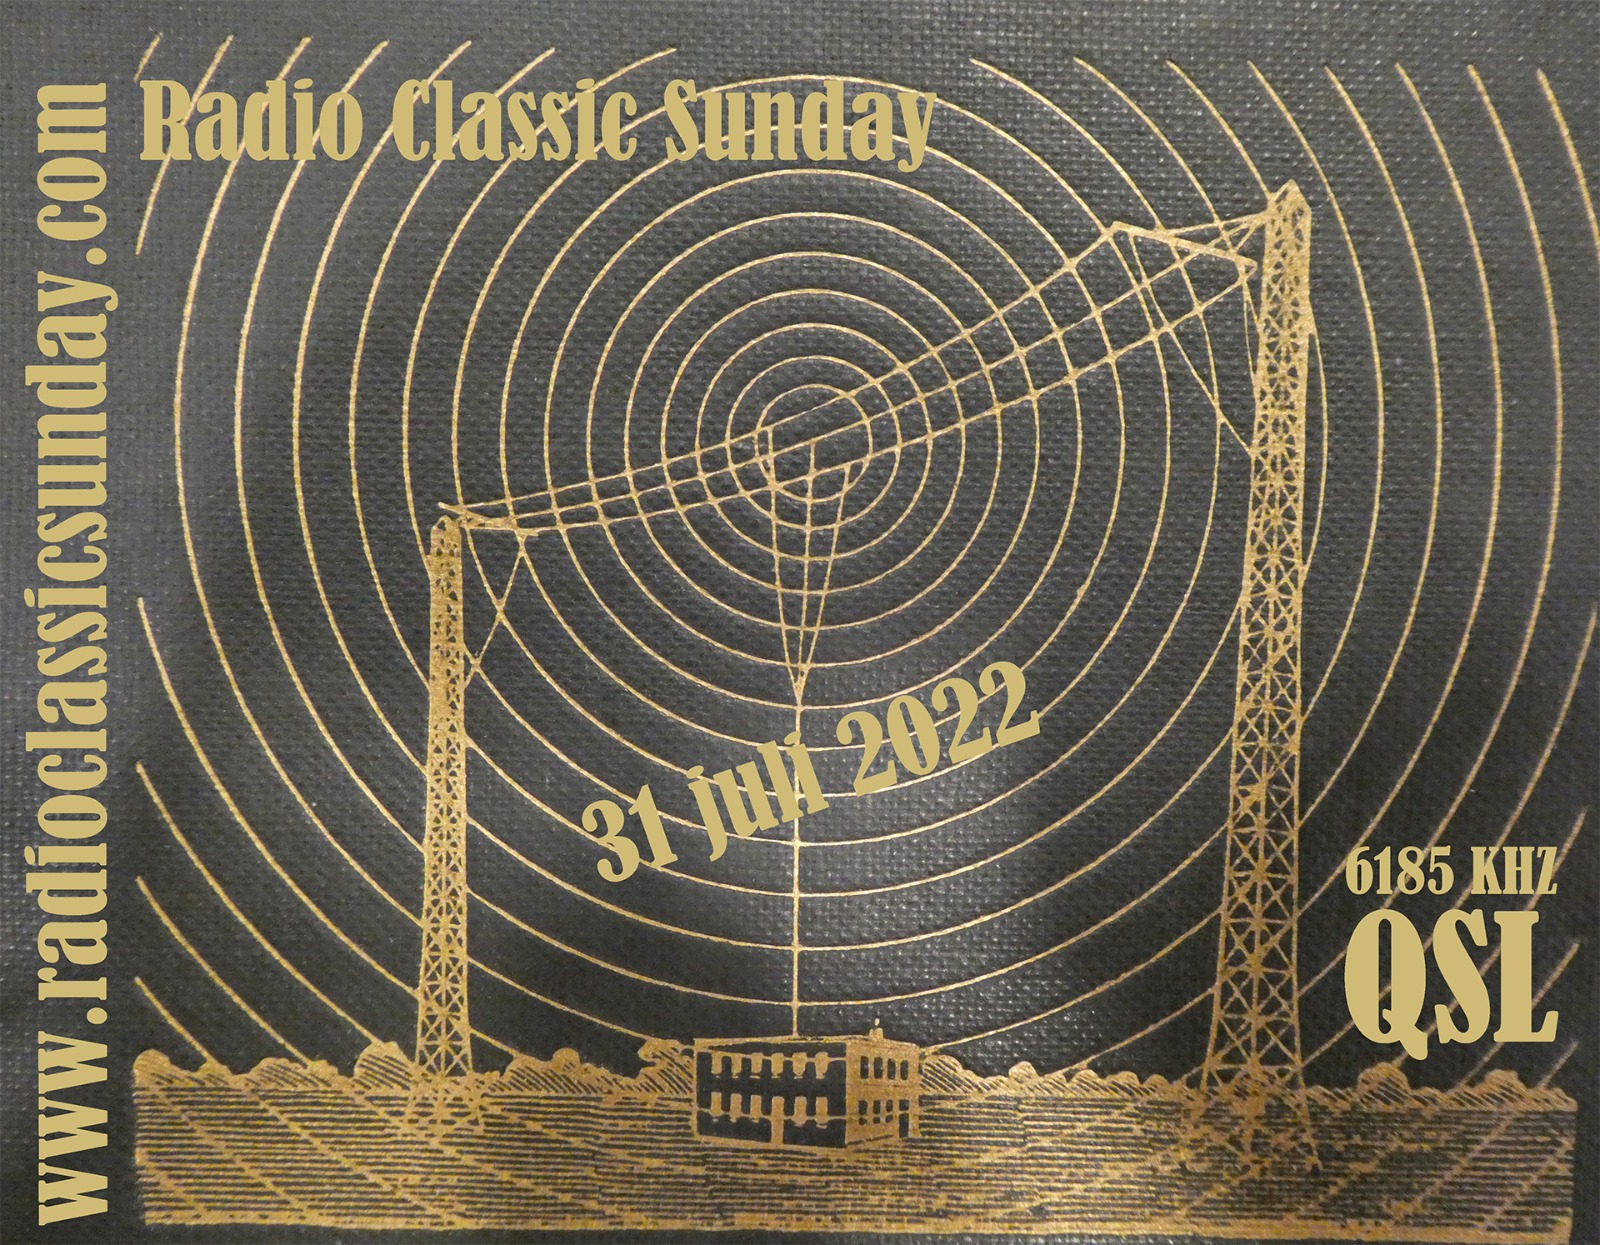 RADIO CLASSIC SUNDAY